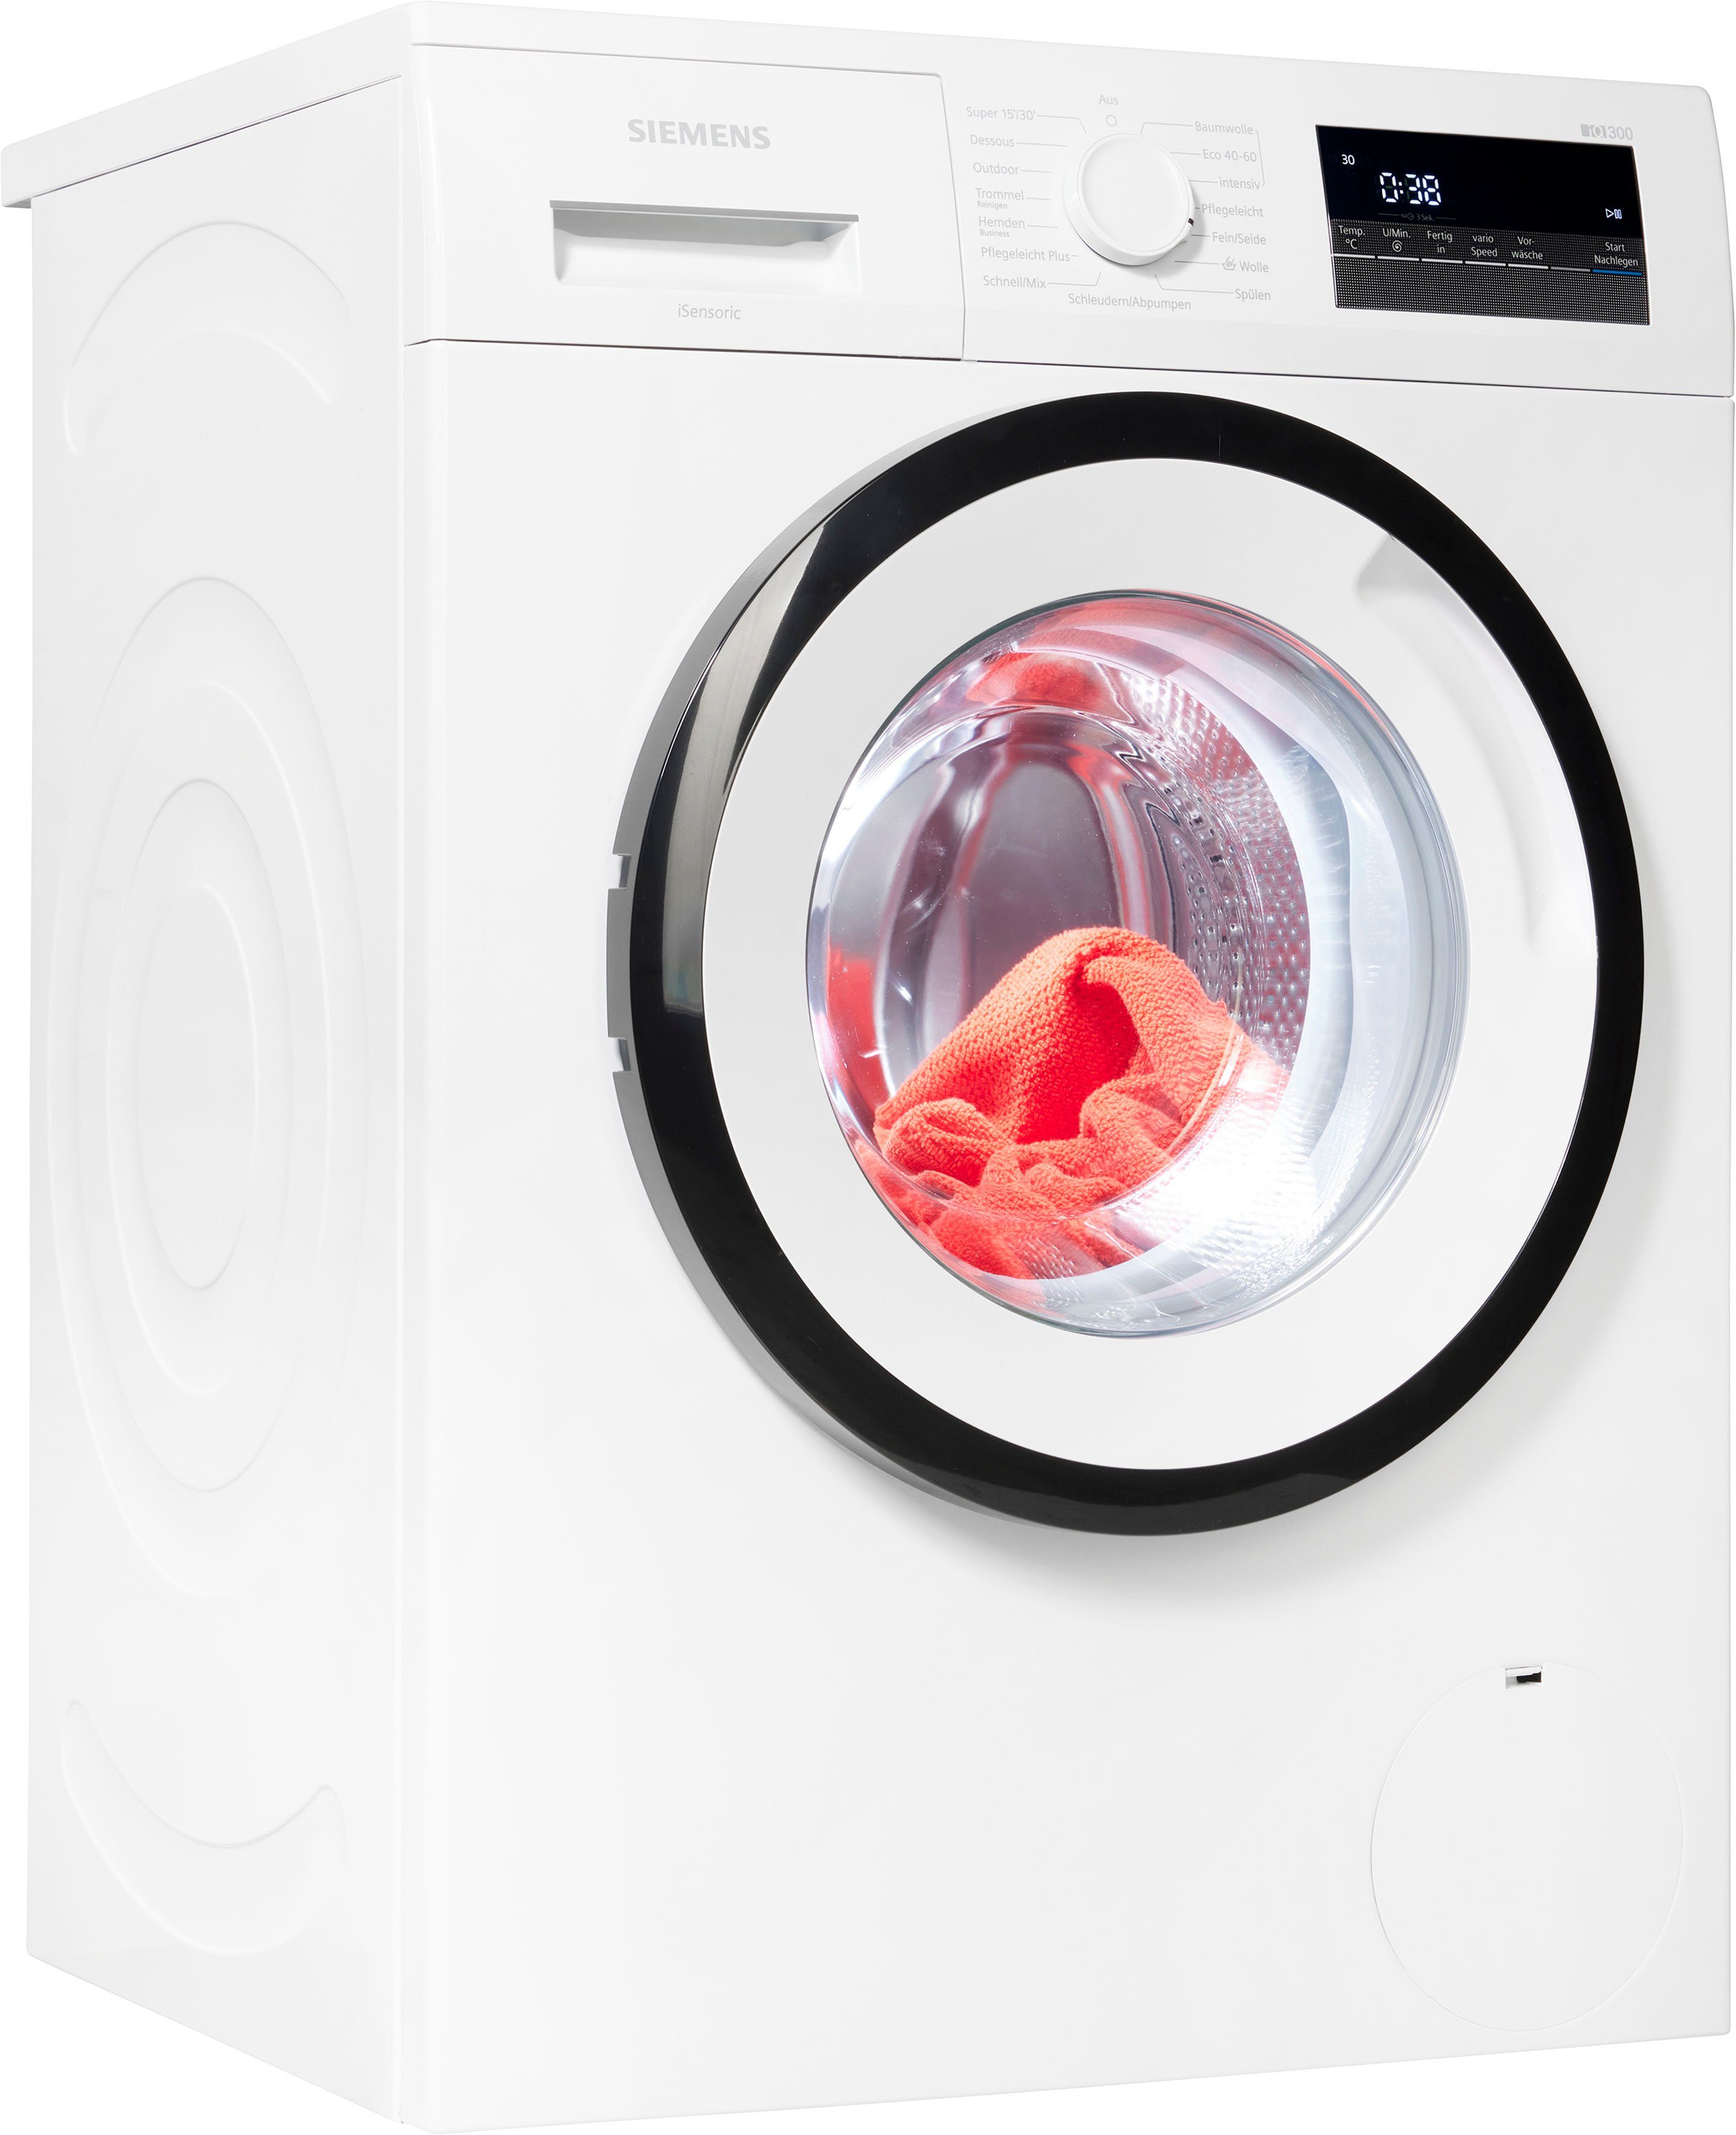 SIEMENS Waschmaschine WM14N128, 8 kg, 1400 U/min, speedPack L, LED-Display,  simpleTouch,Outdoor-Programm, iQdrive